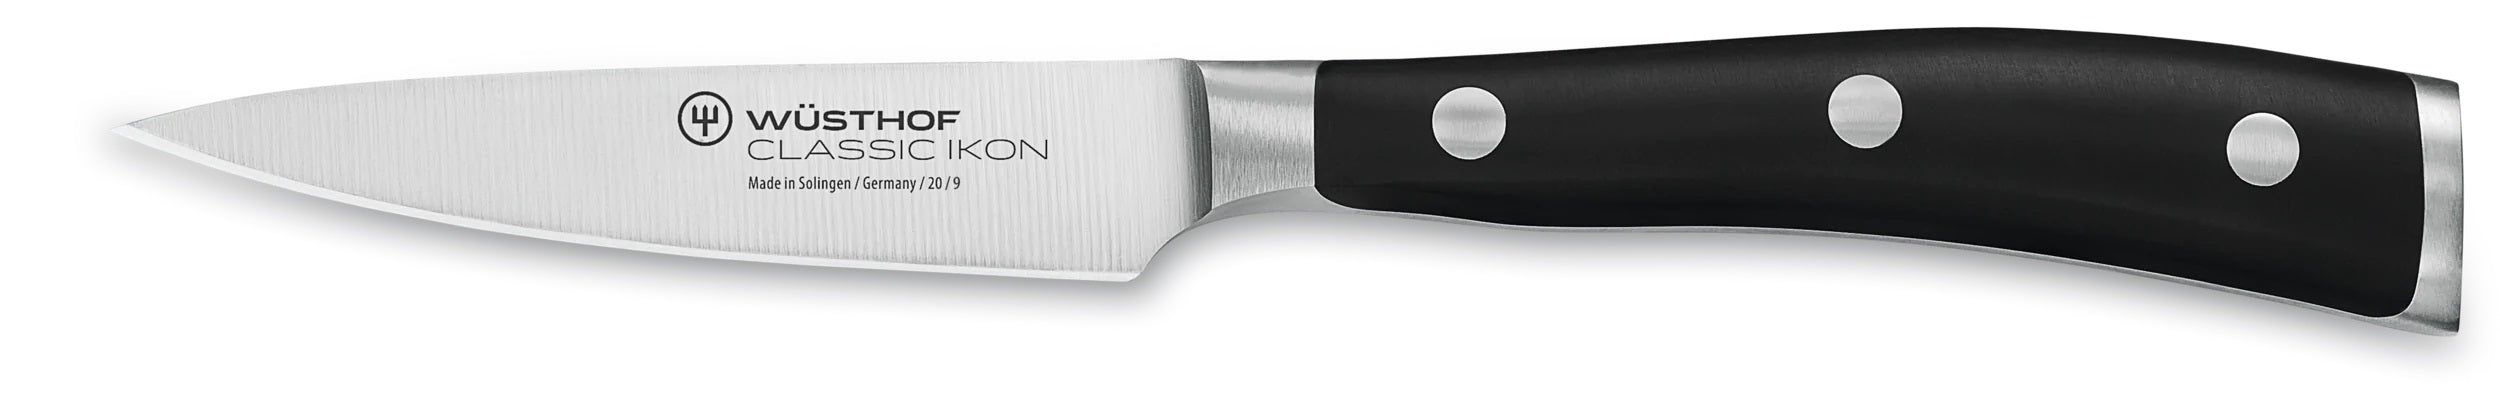 Wusthof Classic Ikon 3.5" Paring Knife 1040330409